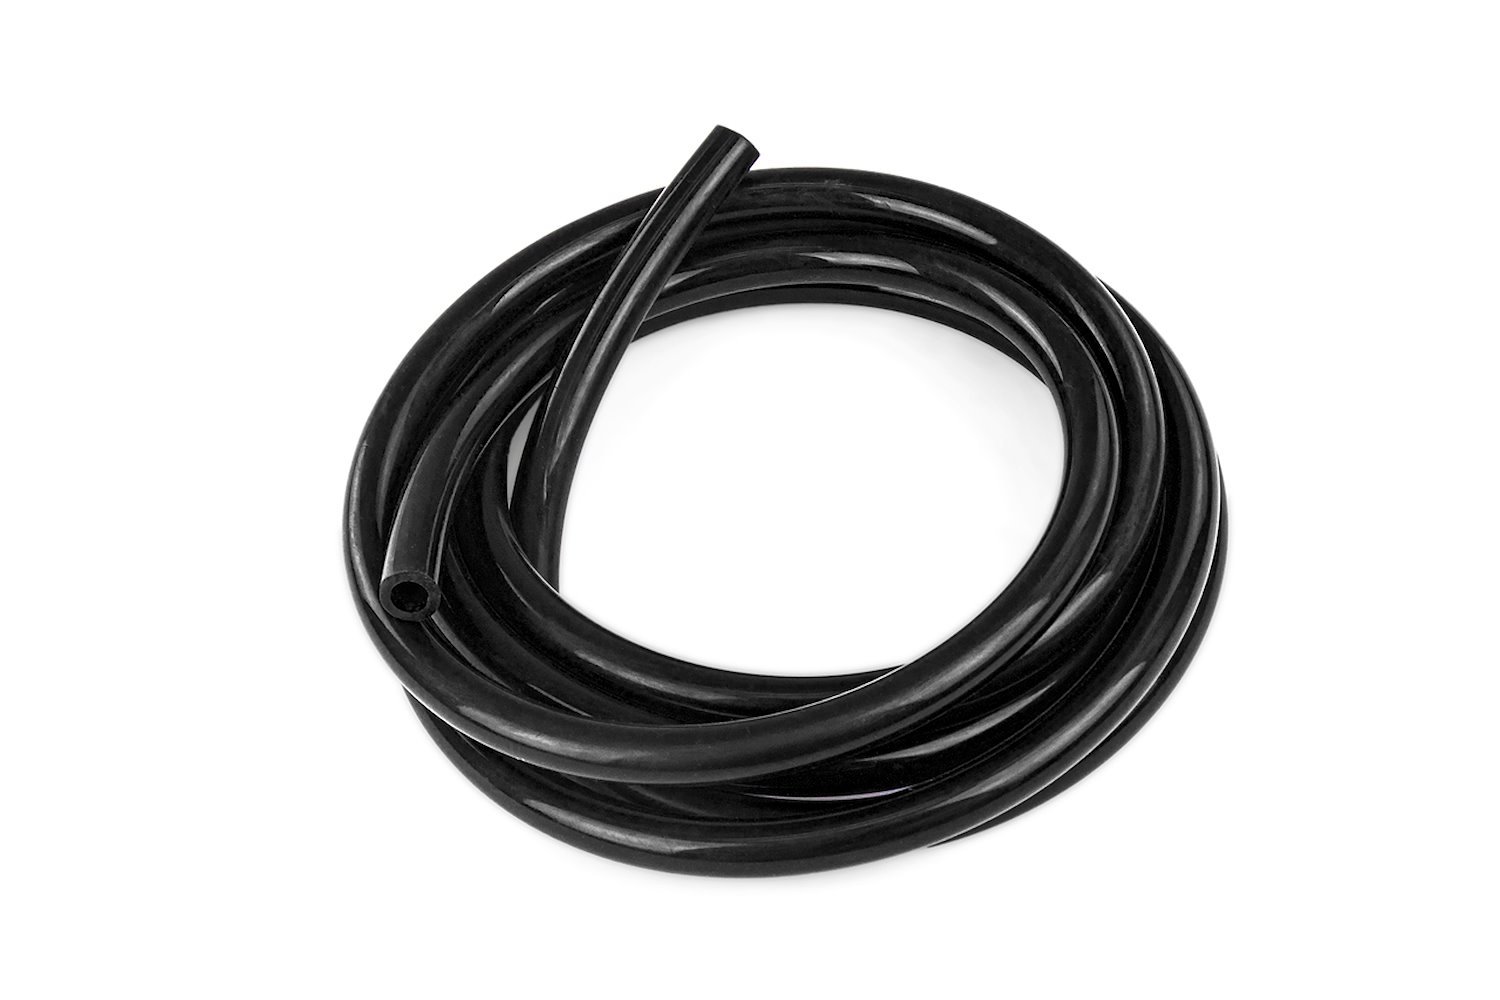 HTSVH5-BLKx25 High-Temperature Silicone Vacuum Hose Tubing, 13/64 in. ID, 25 ft. Roll, Black